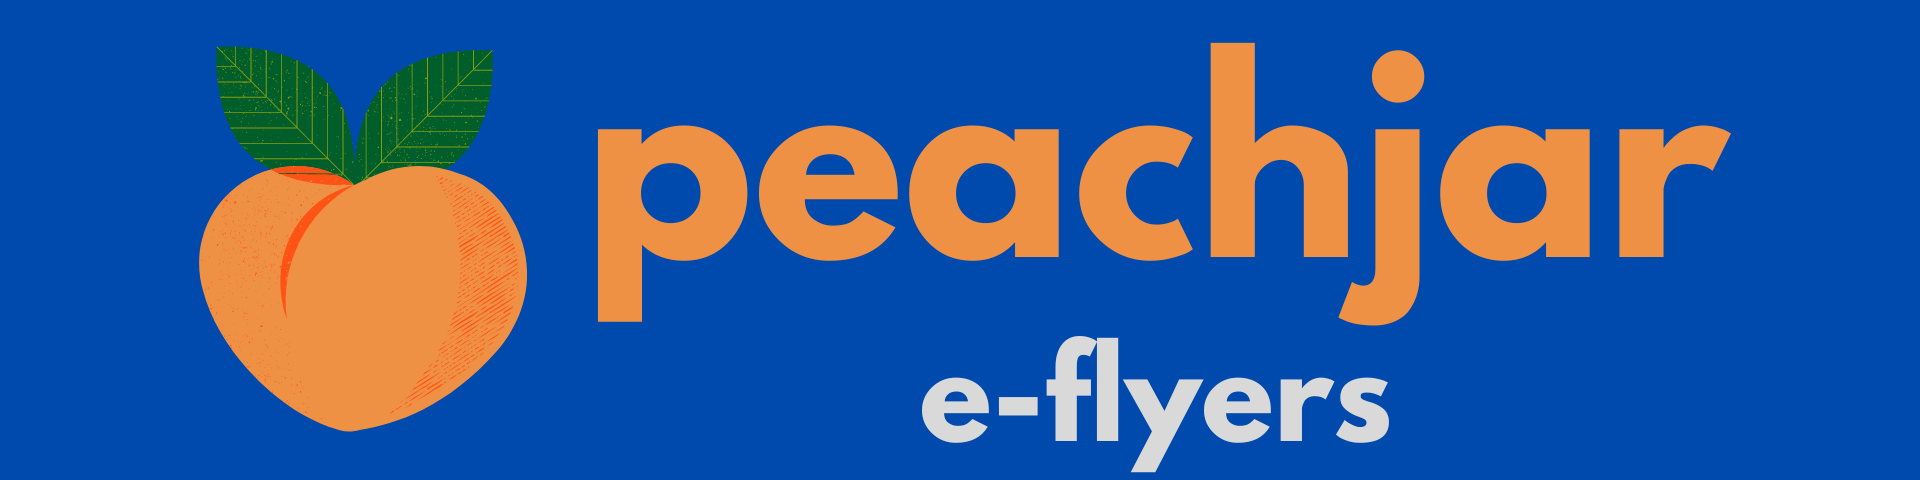 peach jar e-flyer logo